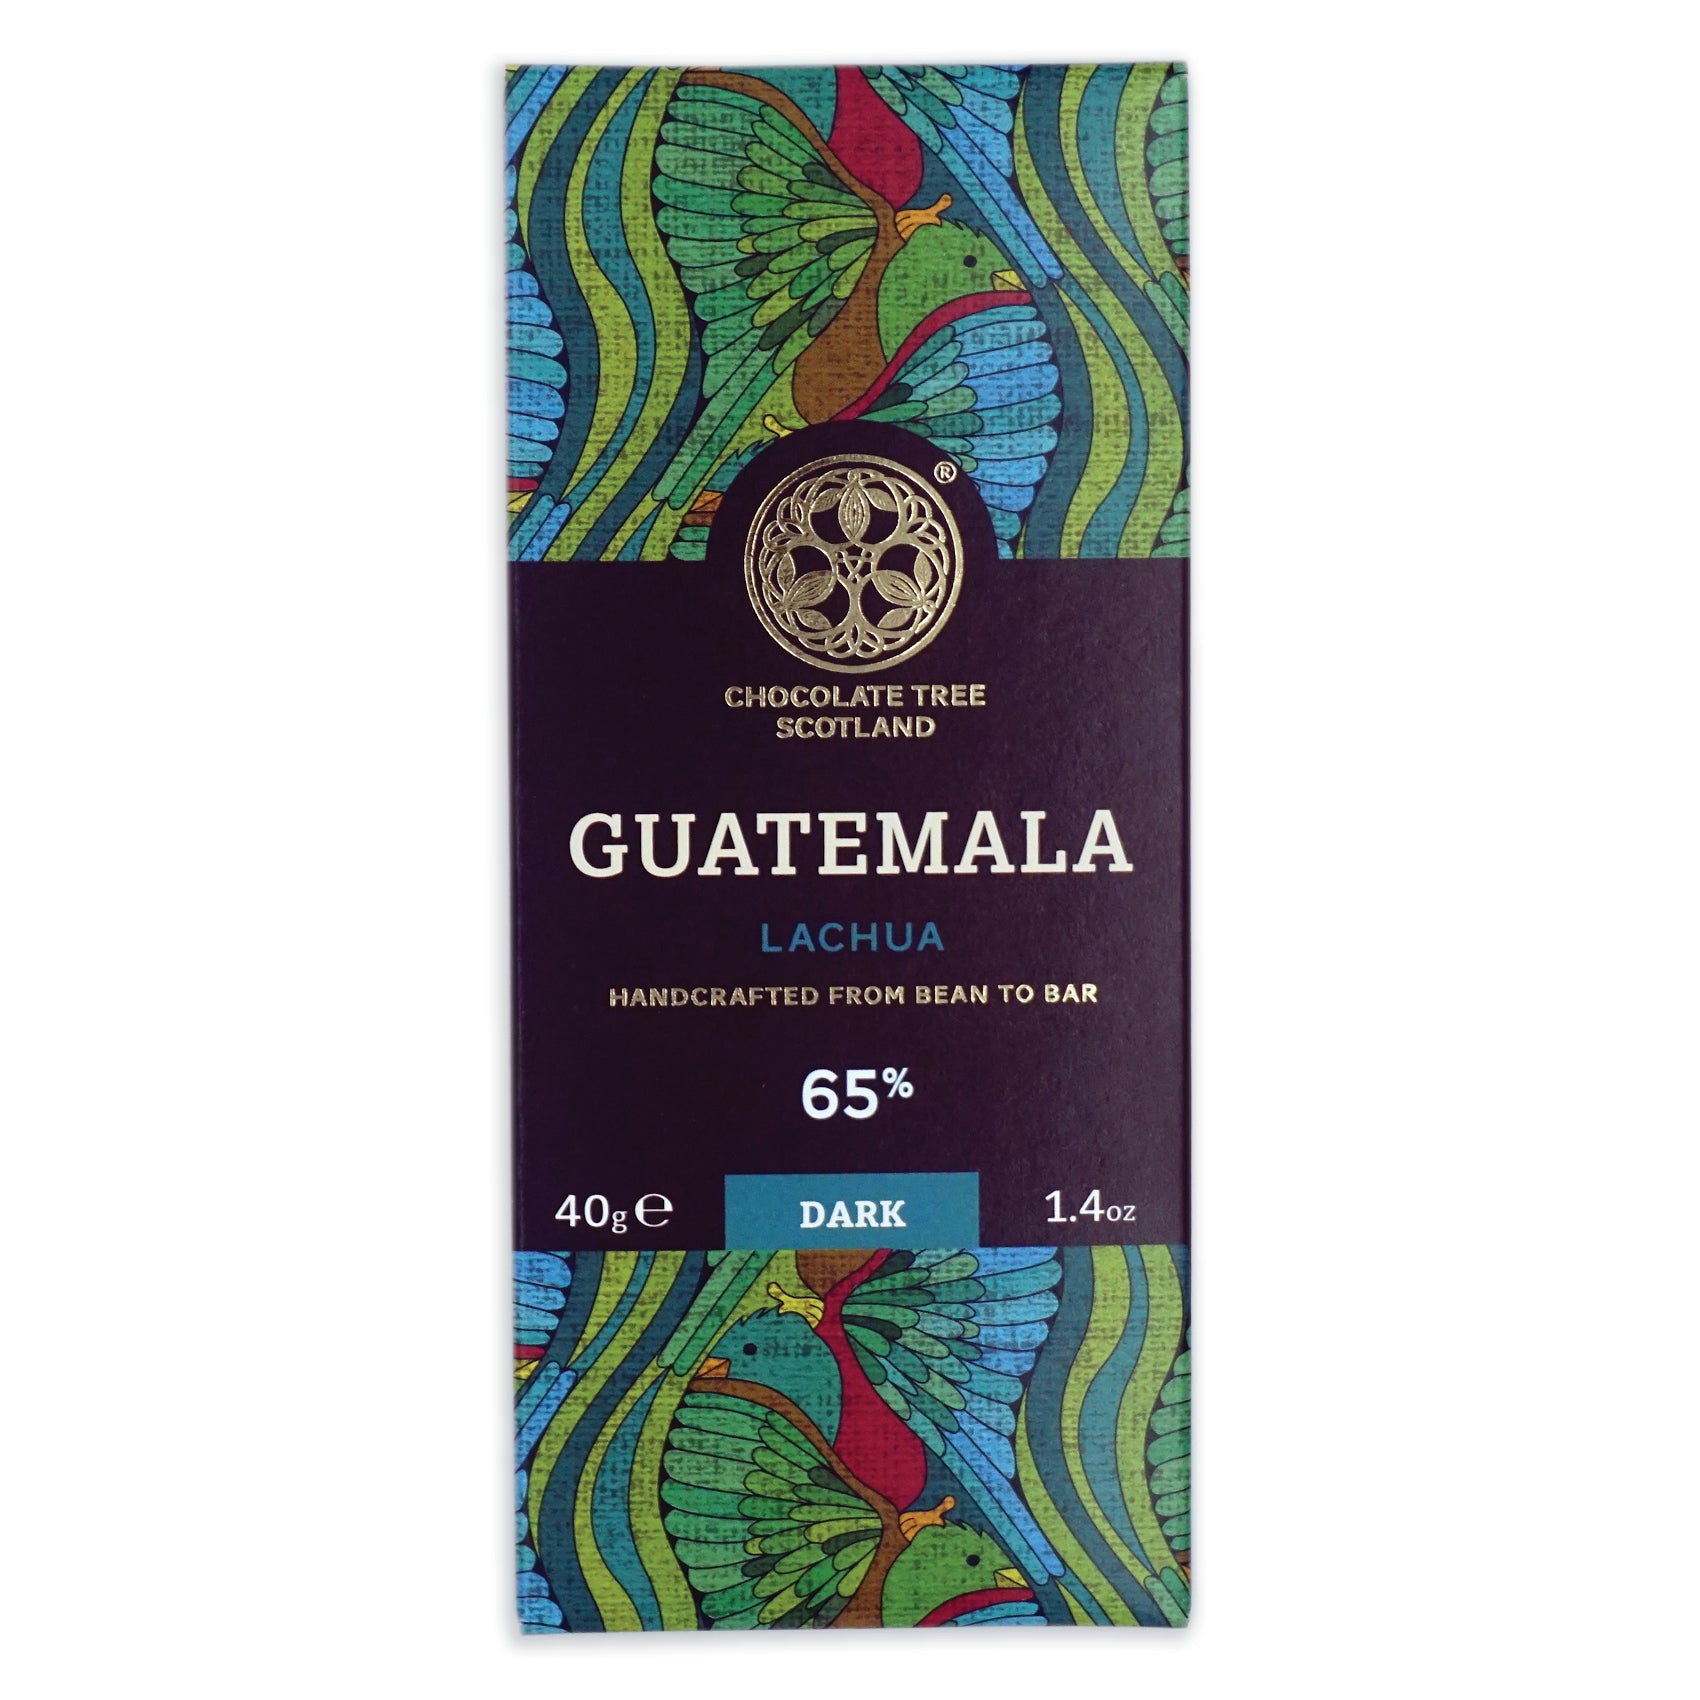 A bar of Chocolate Tree Guatemala 65% dark chocolate